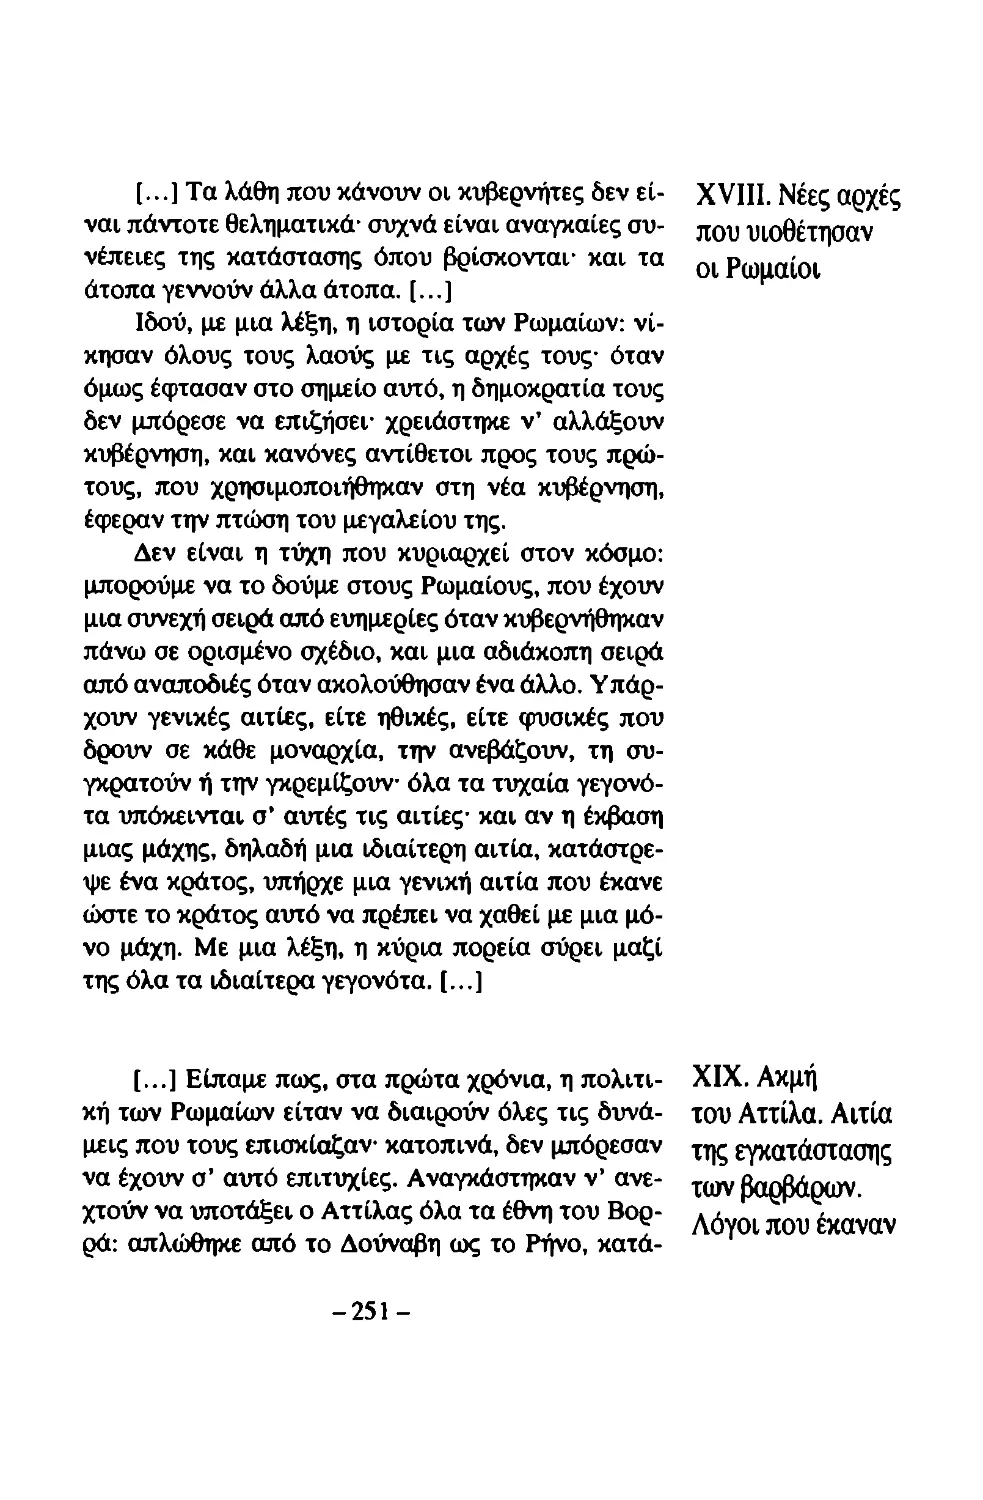 XVIII. Νέες αρχές που υιοθέτησαν οι Ρωμαίοι
XIX. Ακμή του Αττίλα. Αιτία της εγκατάστασης των βαρβάρων.